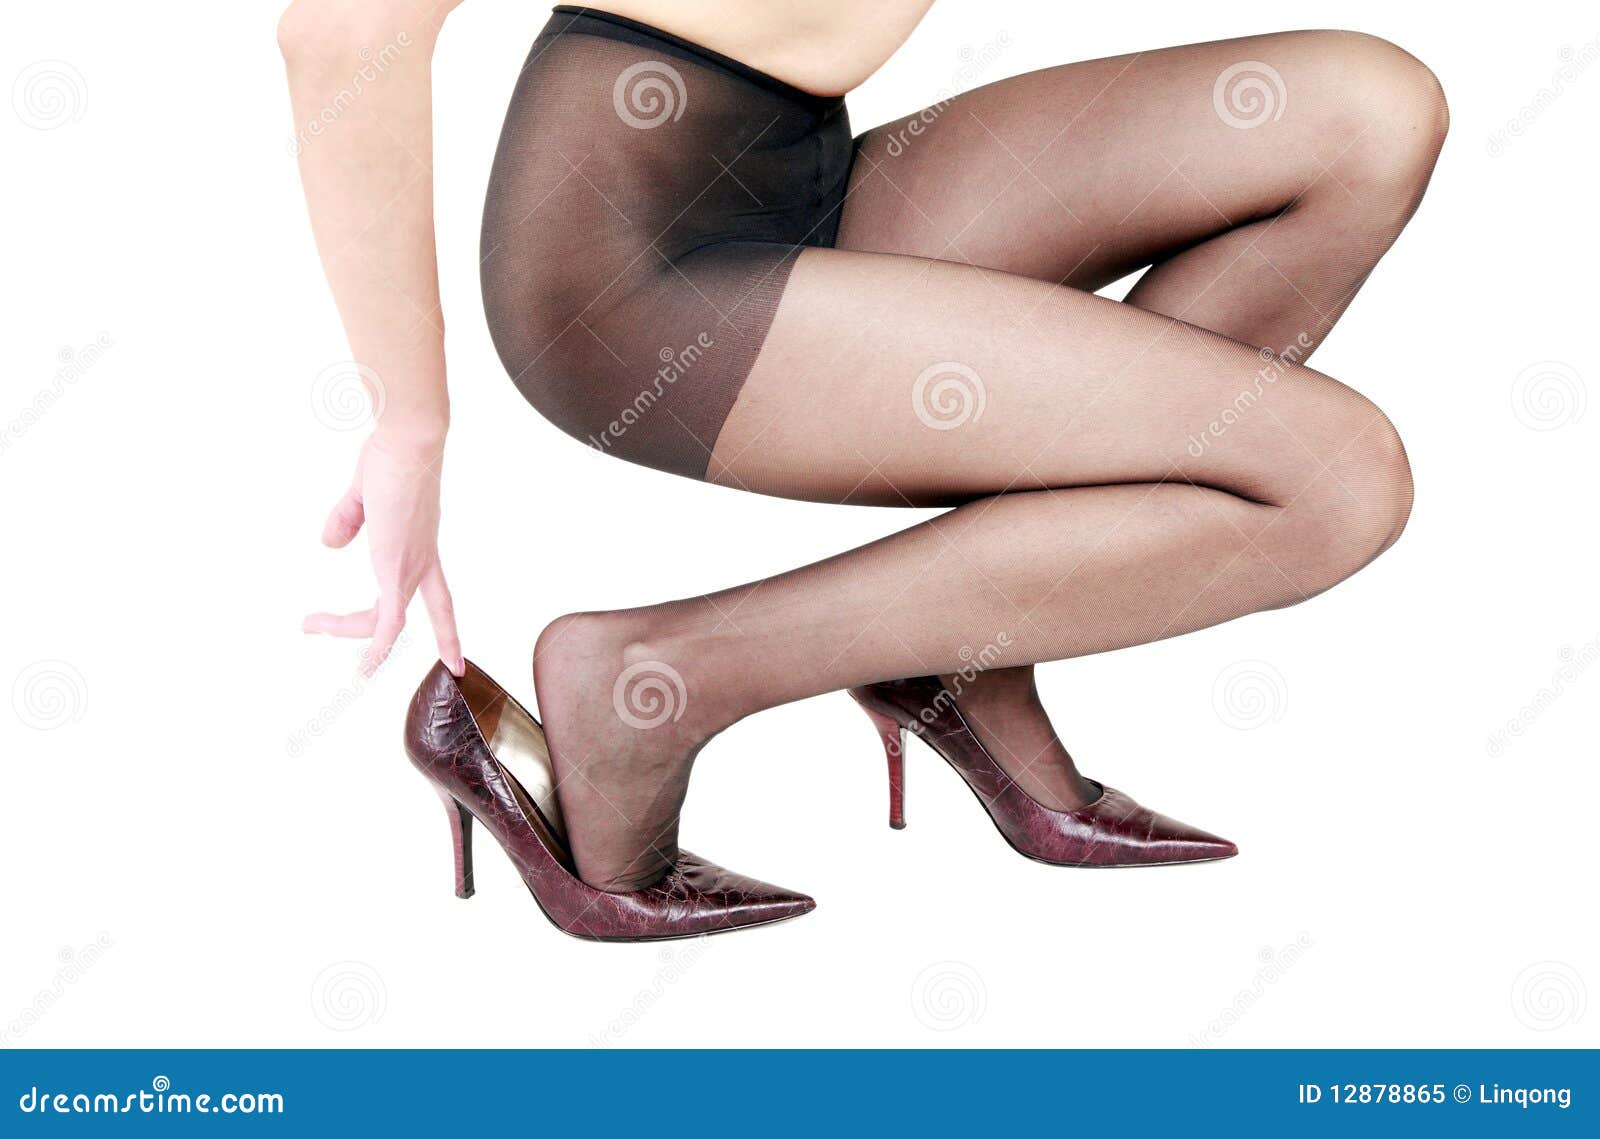 Legs in stockings stock image image